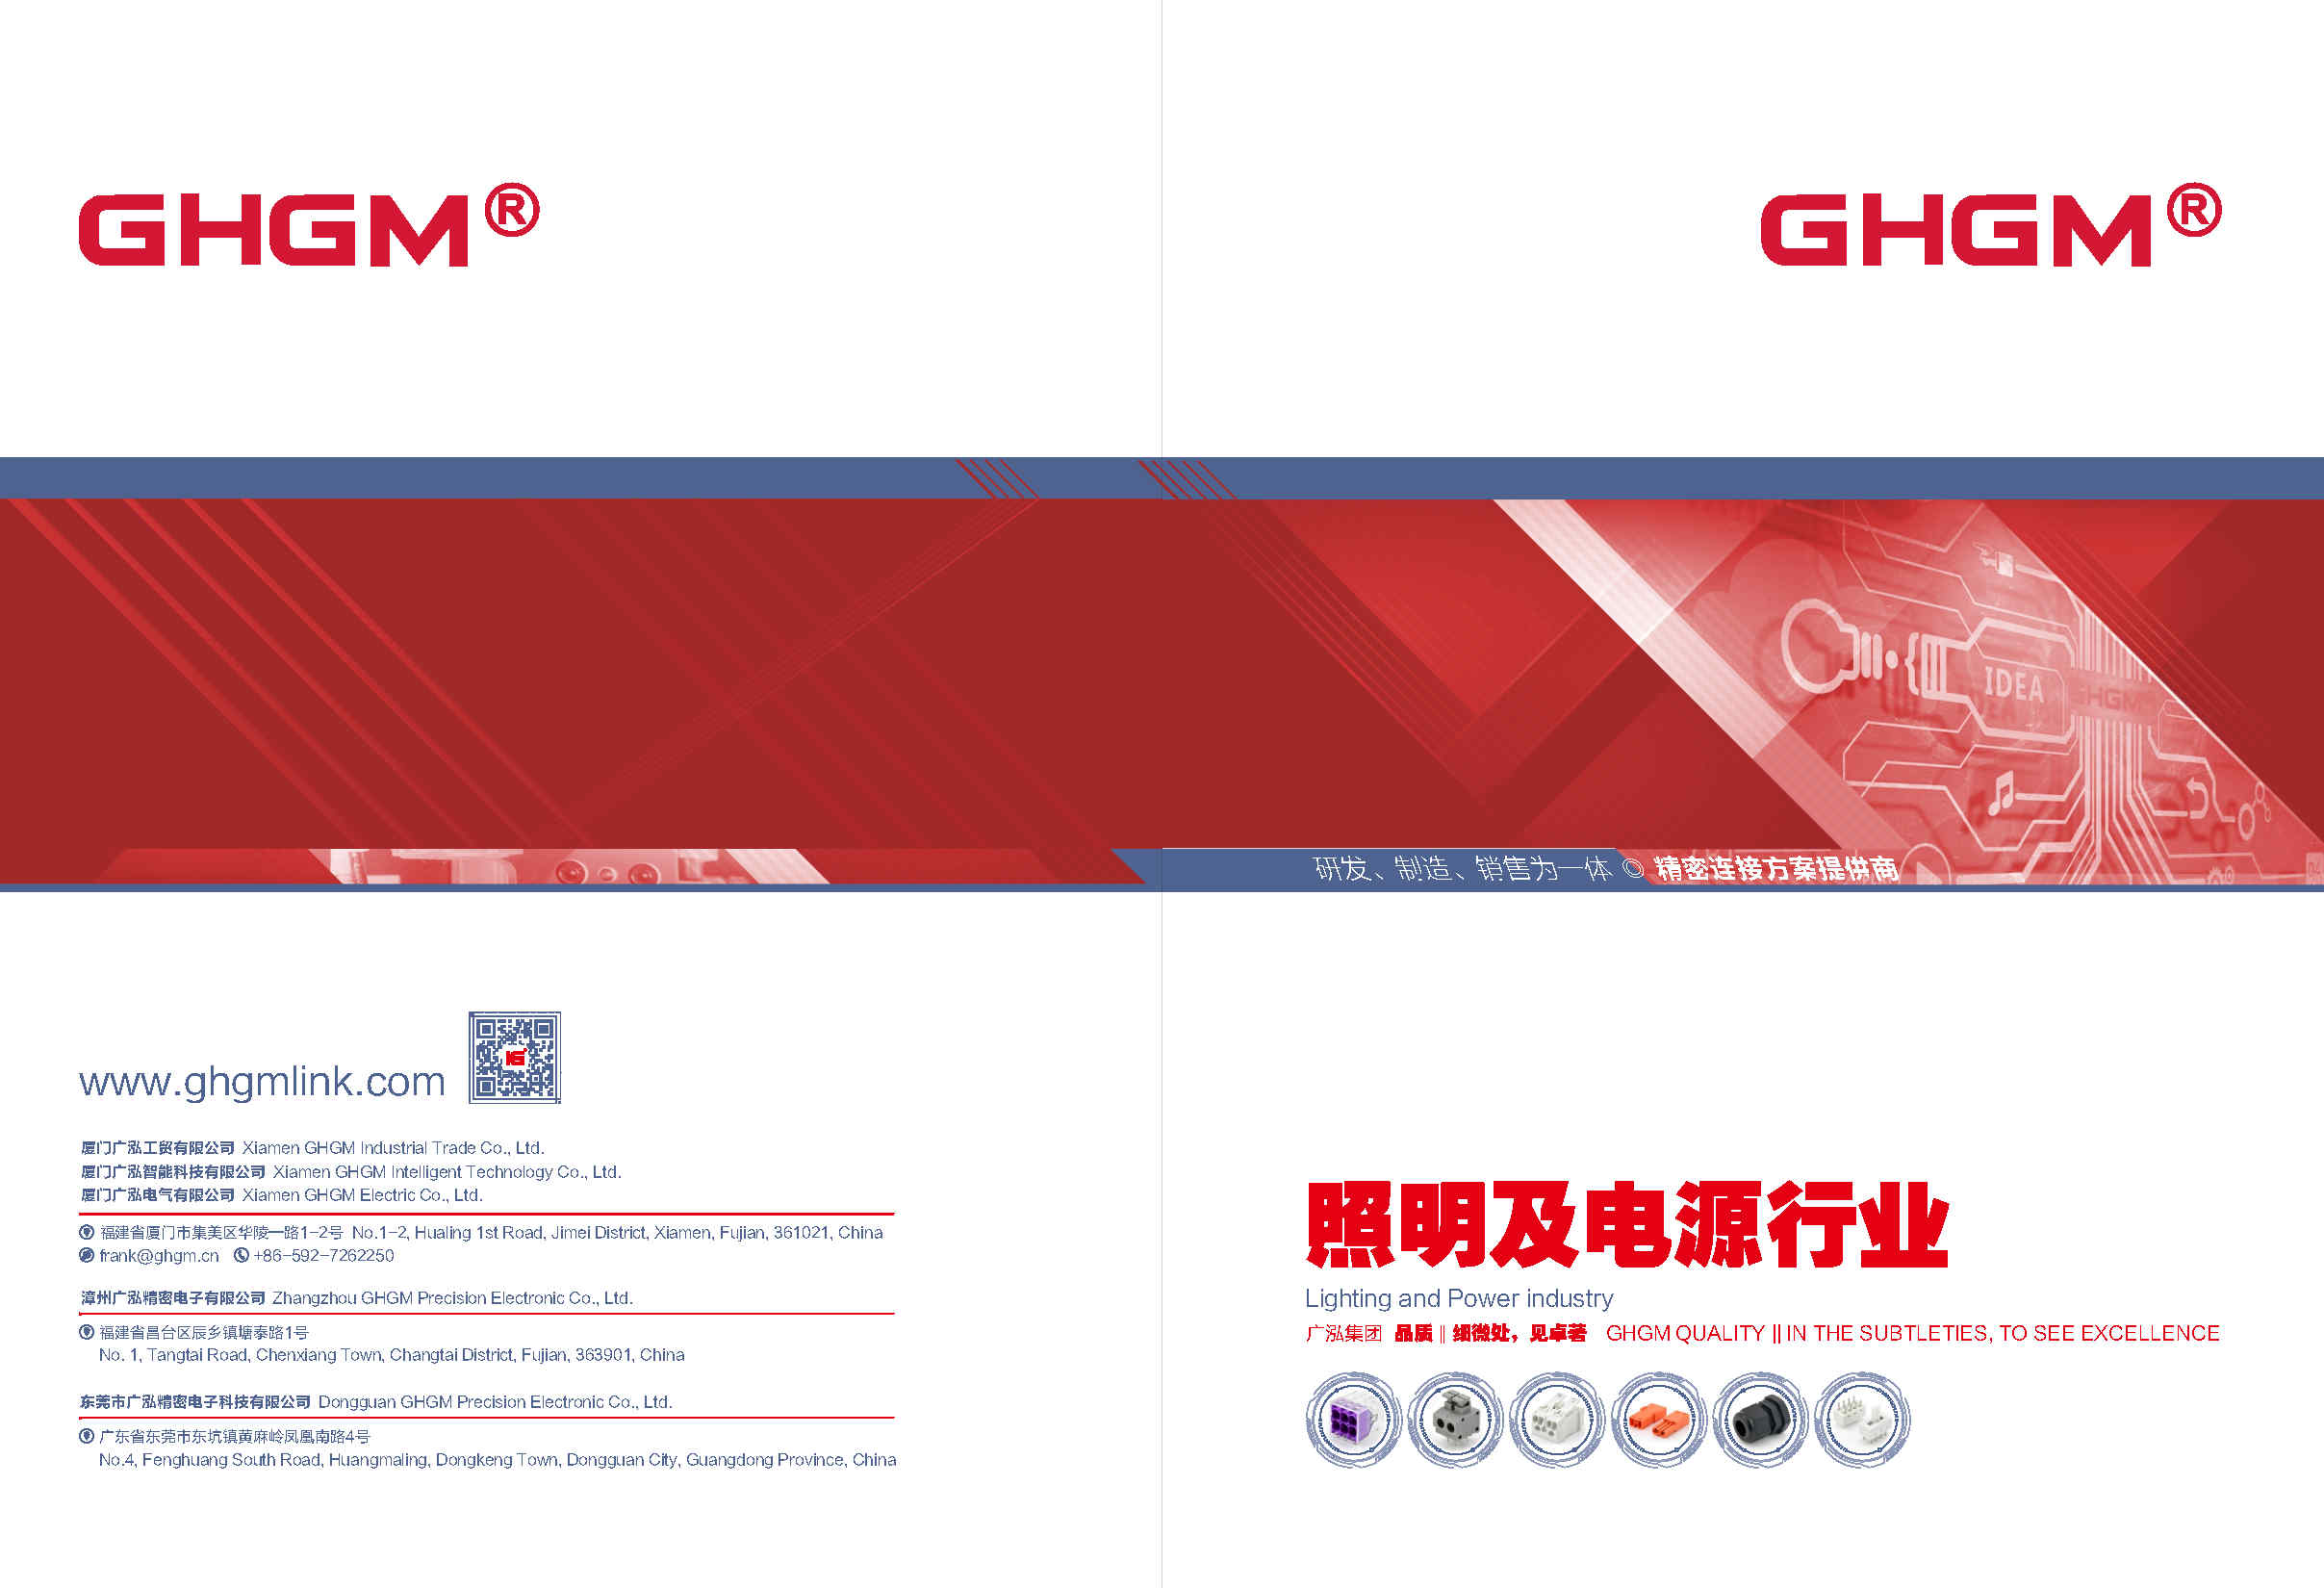 2022 GHGM, Light & Power Industry, オンライン カタログ
